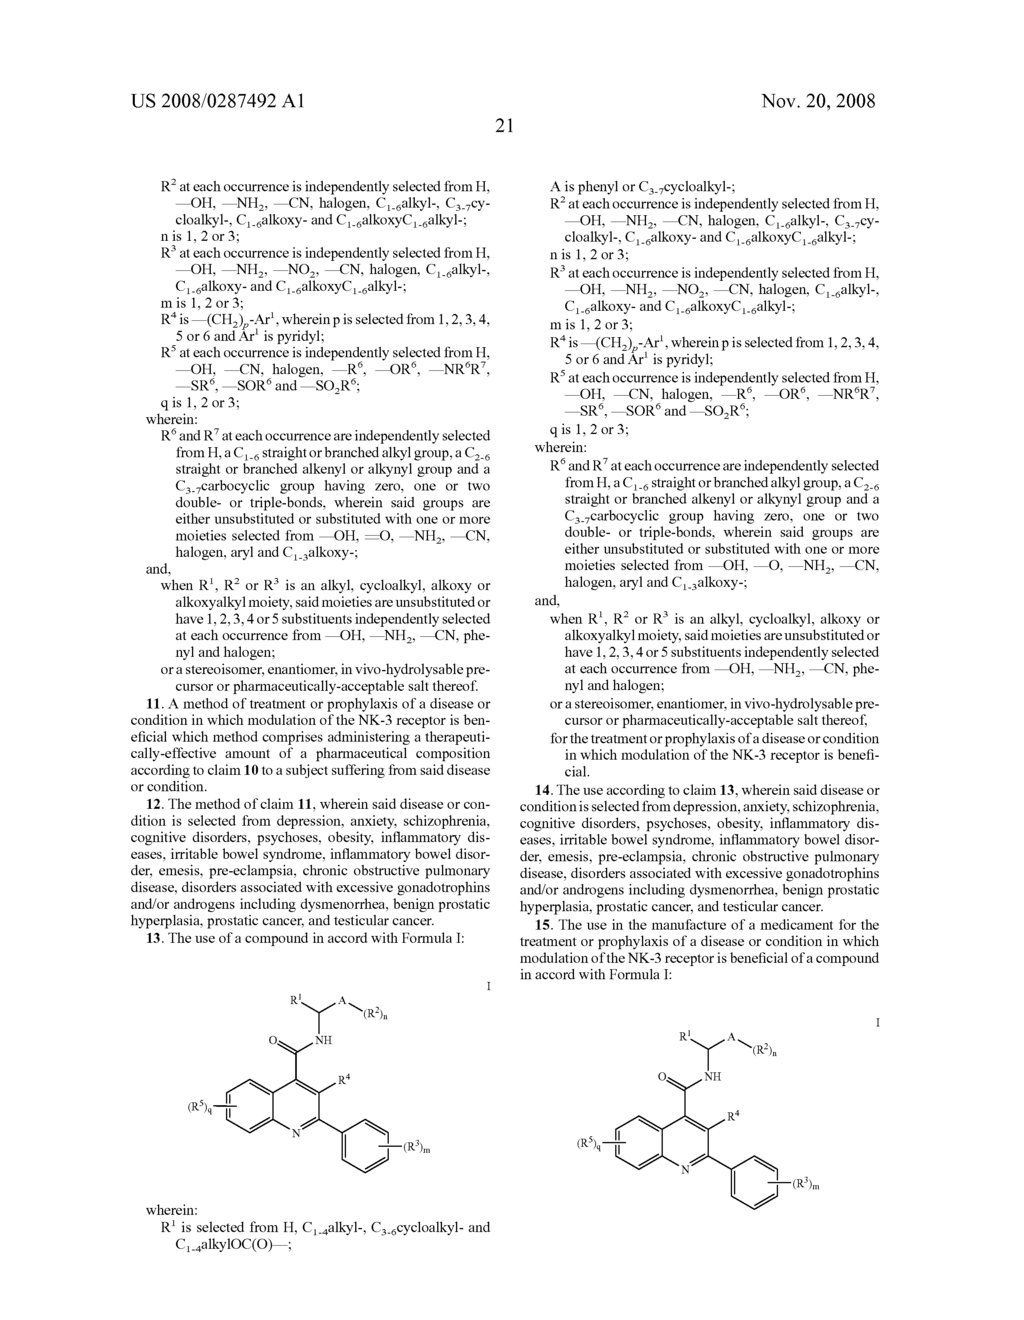 Alkylpyridyl Quinolines as Nk3 Receptor Modulators - diagram, schematic, and image 22